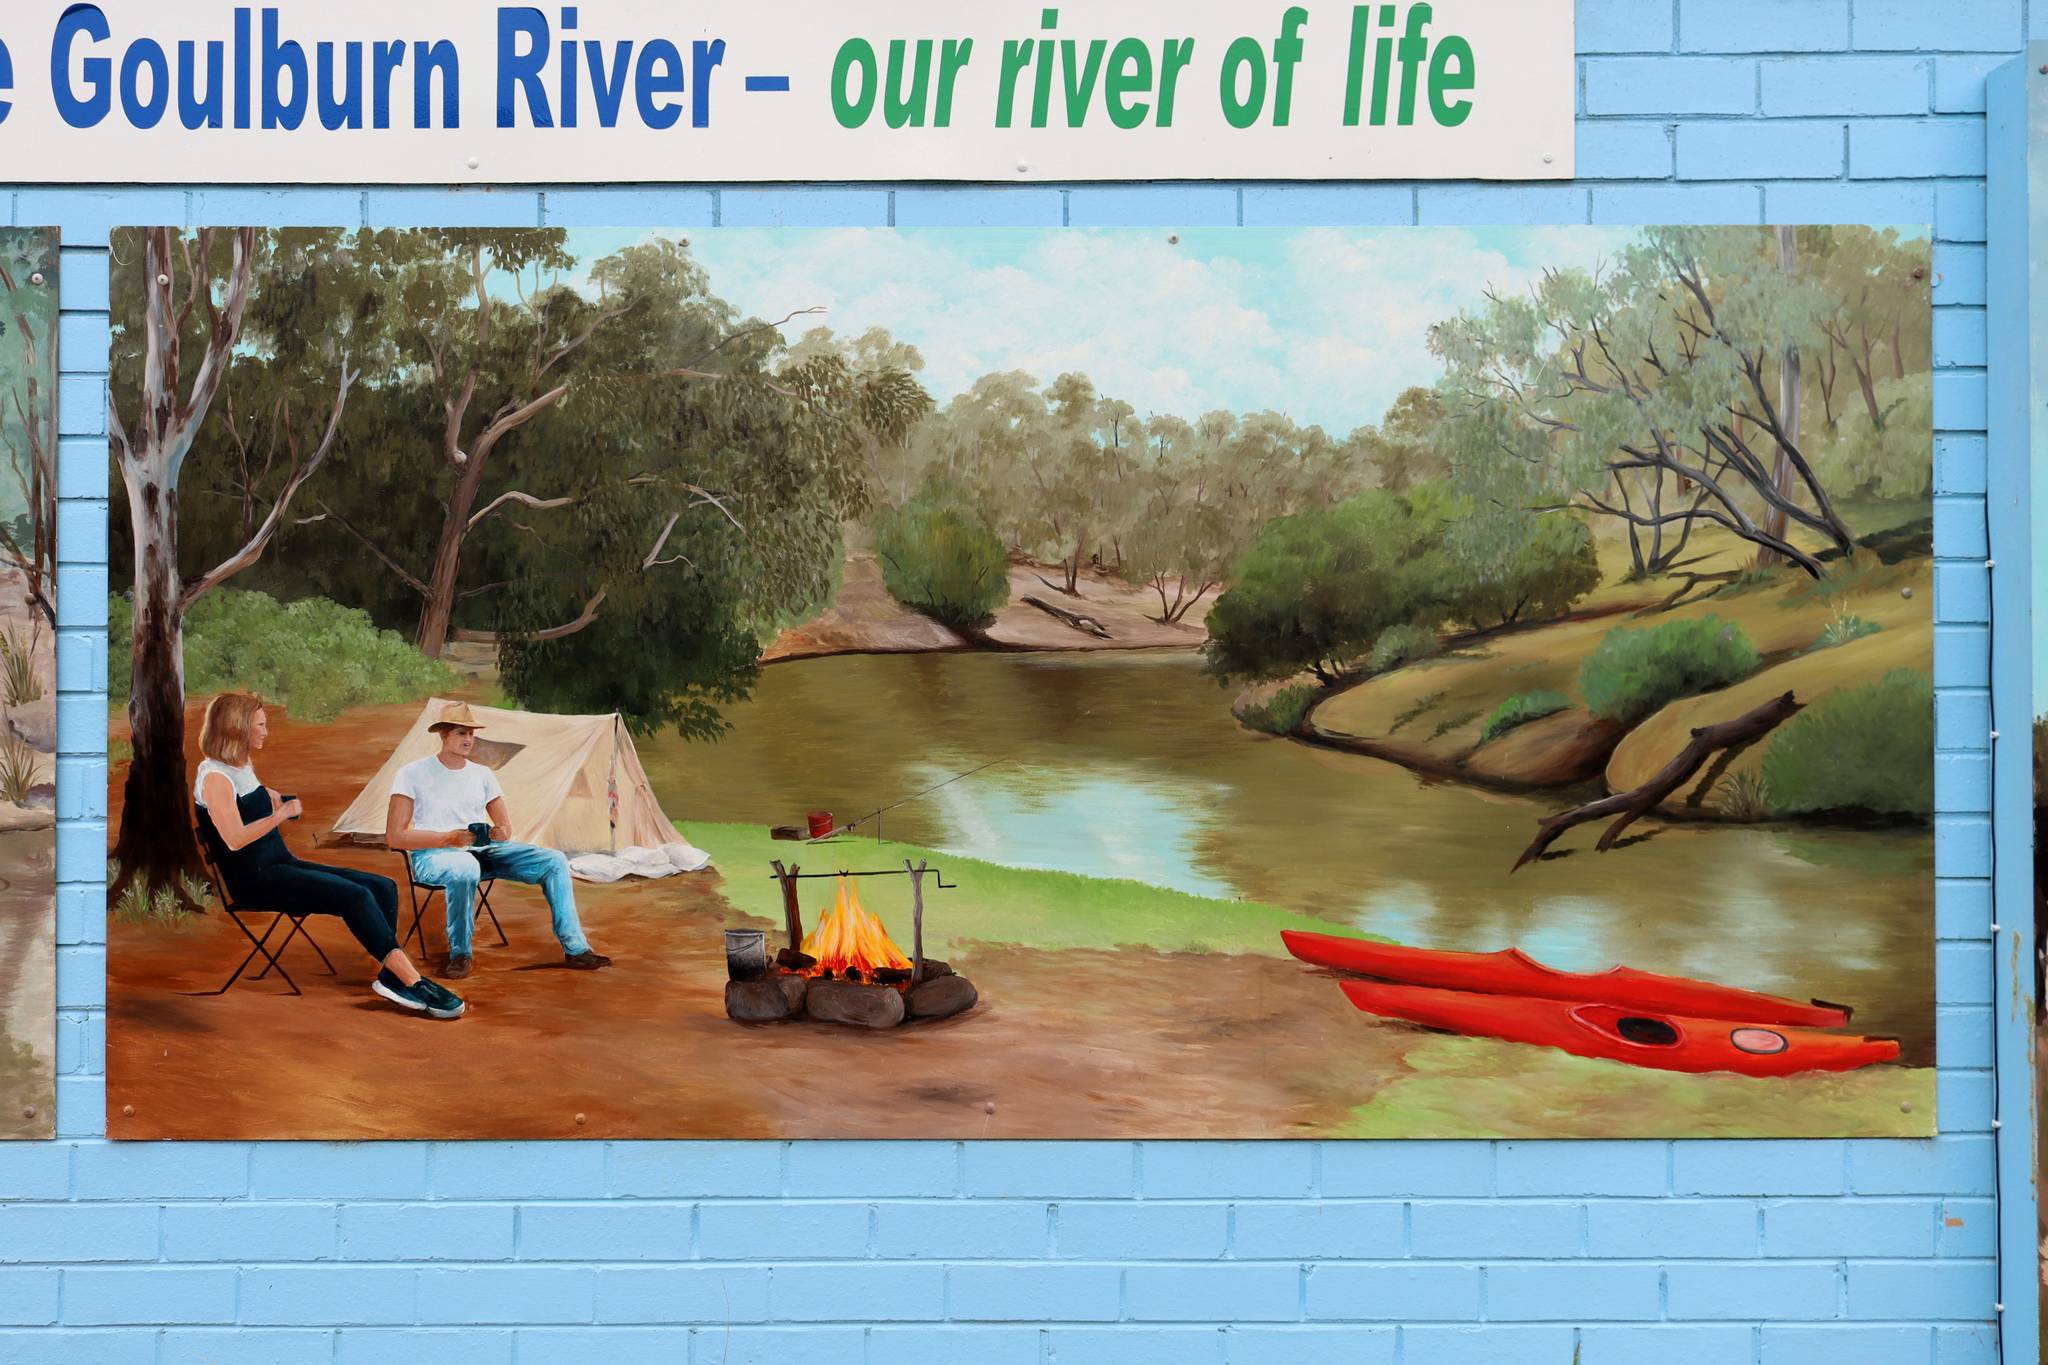 Murray Ross, Jill Conway, Teena Savage&mdash;The Goulburn River - Our River of Life